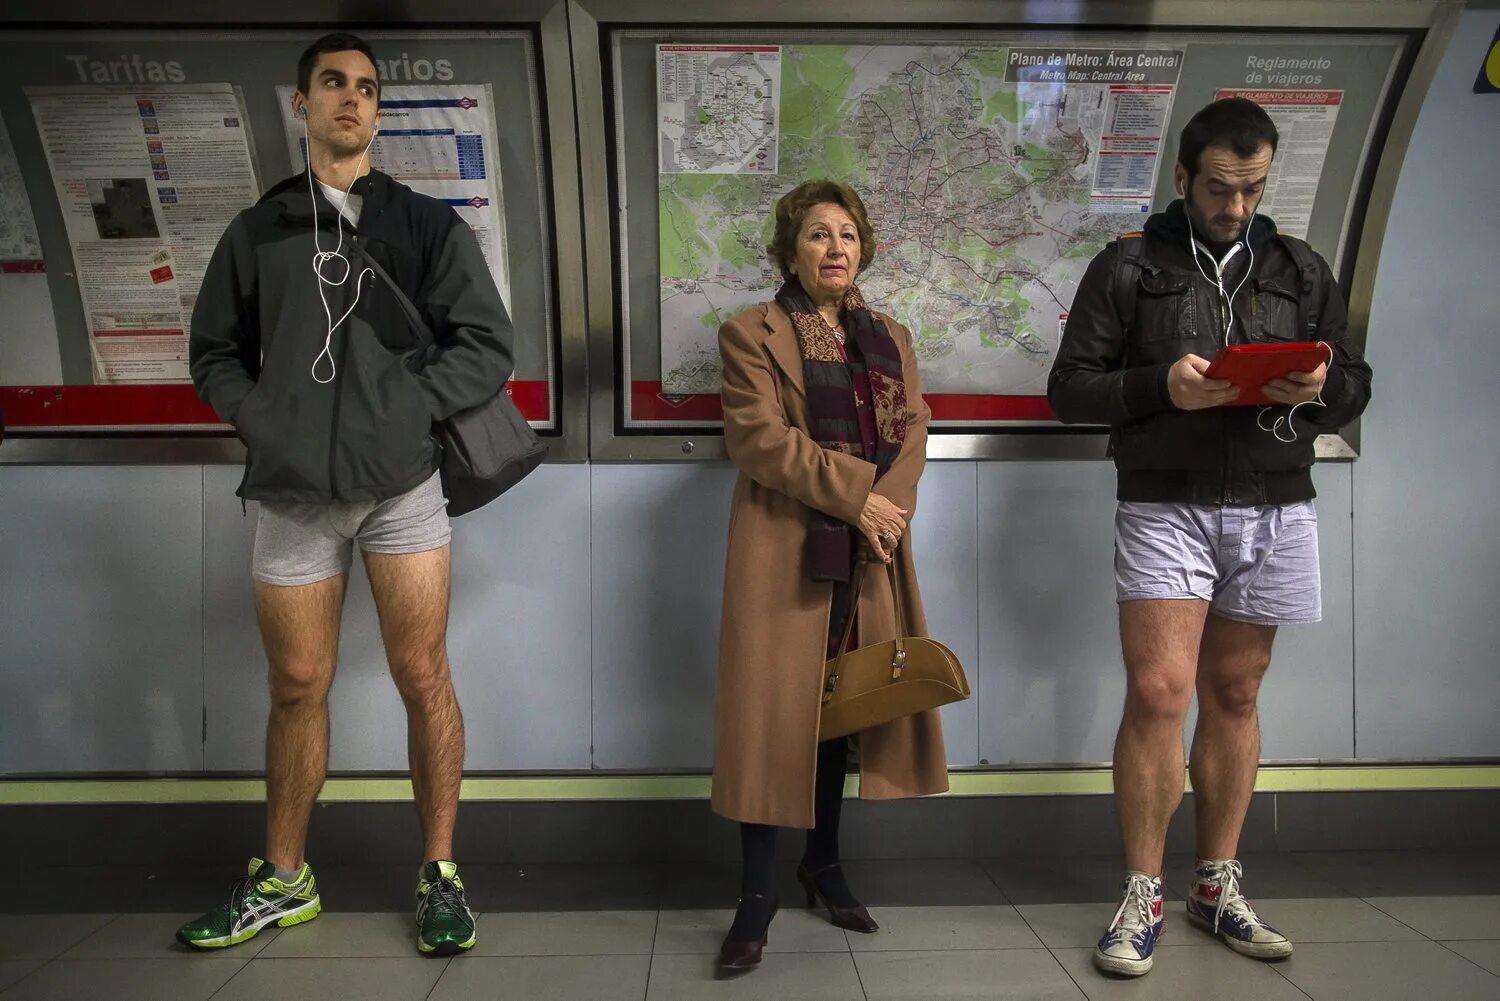 No Pants Subway Ride 2014. Джон Туртурро без штанов в трансформерах. В метро без штанов. Остался без штанов.